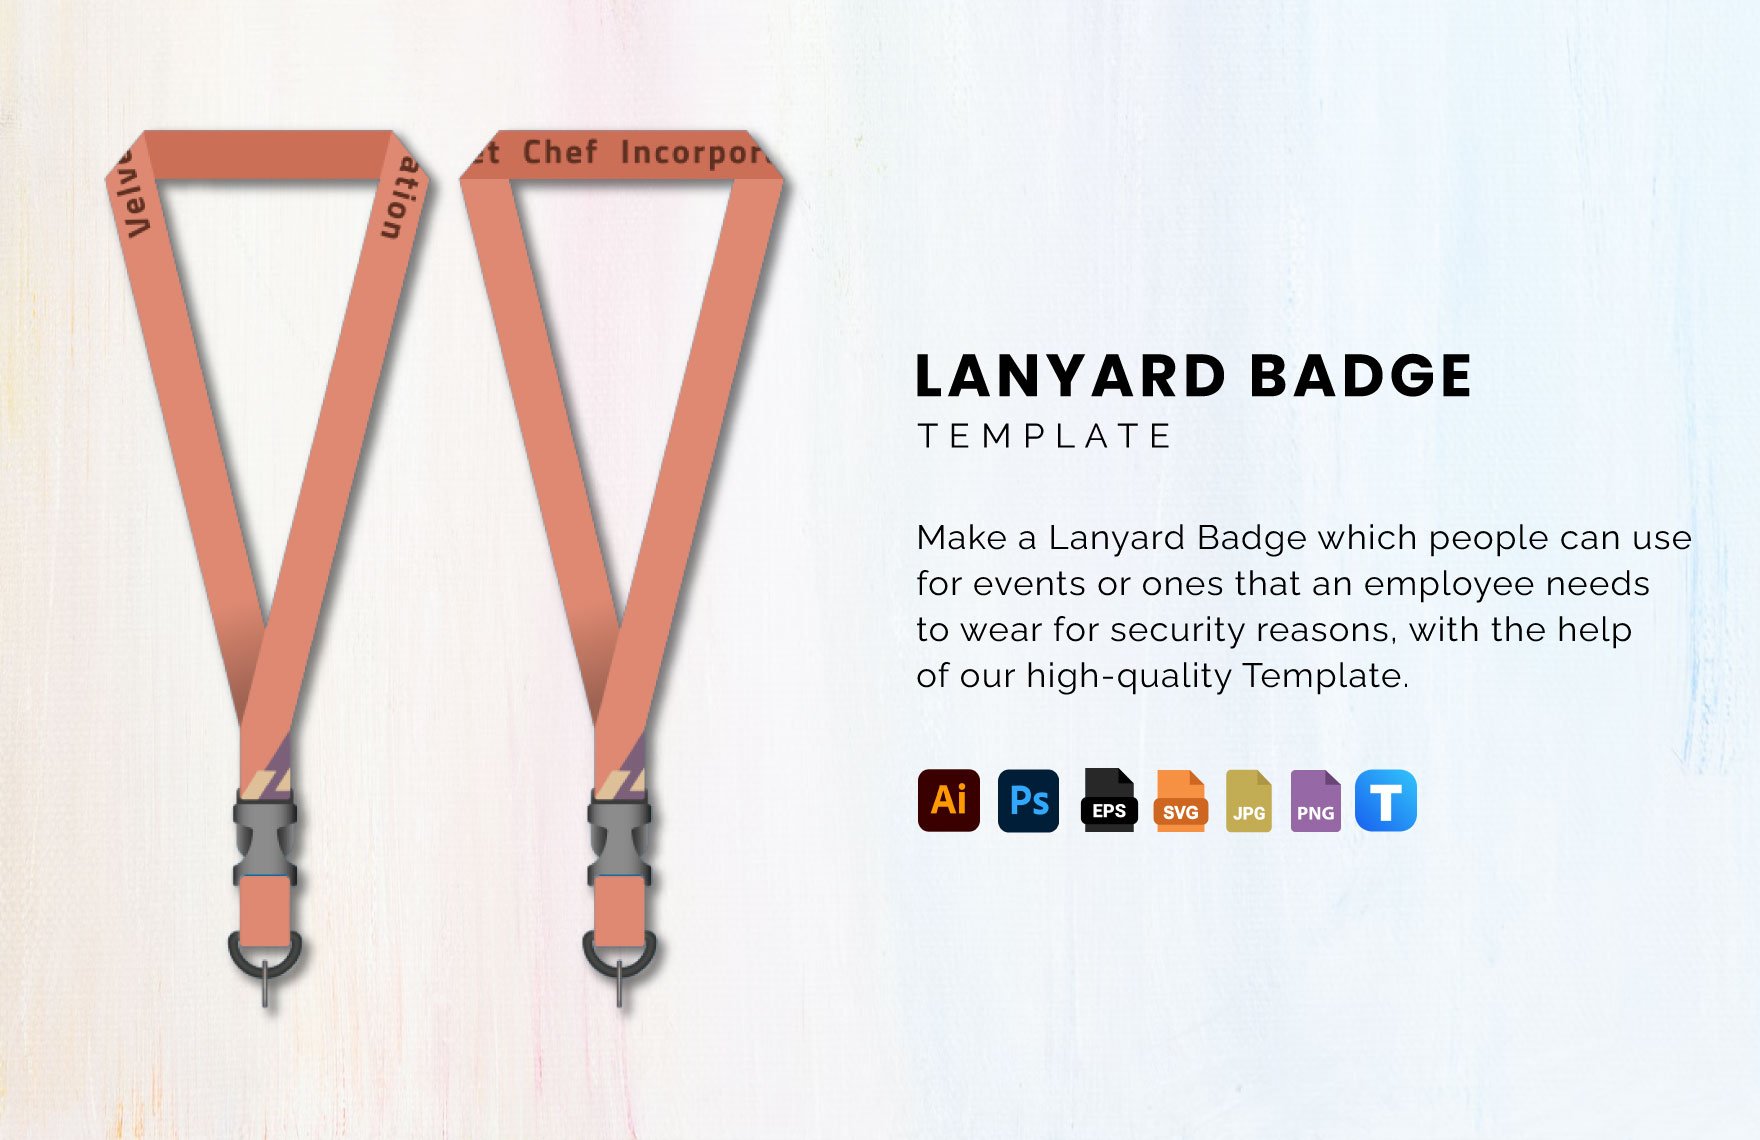 Lanyard Badge Template in Illustrator, PSD, EPS, SVG, JPG, PNG